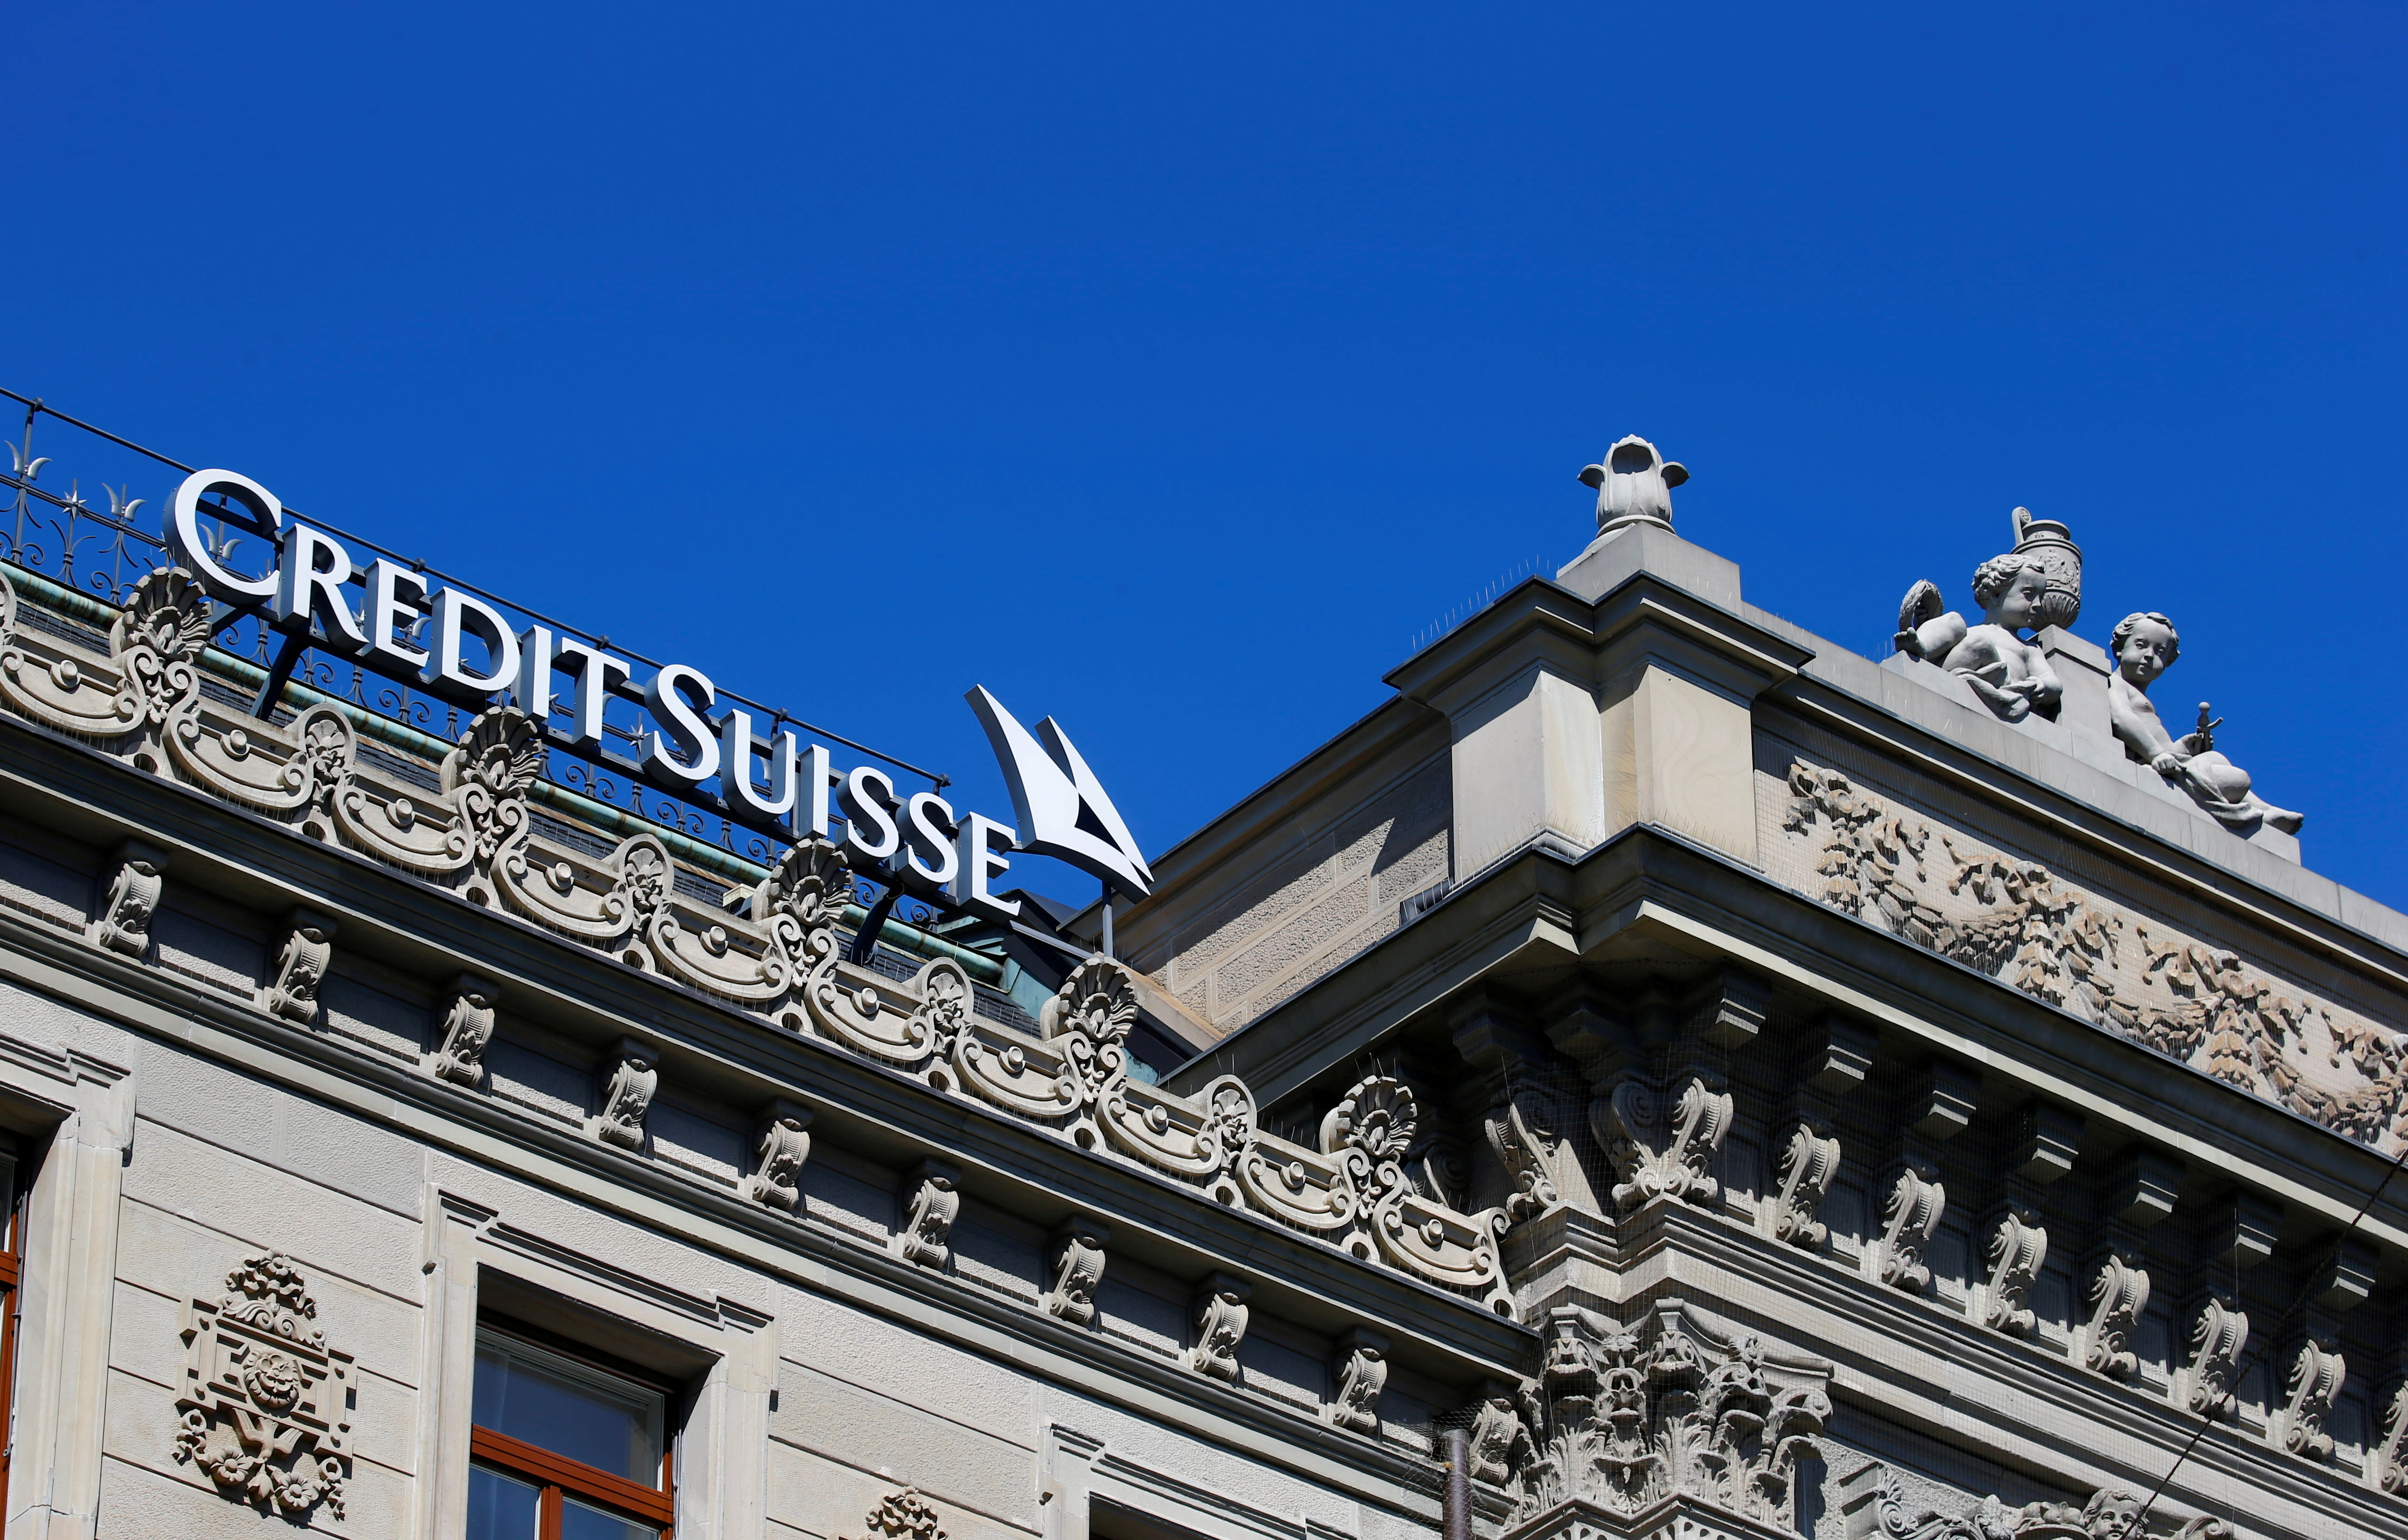 Logo of Swiss bank Credit Suisse is seen in Zurich